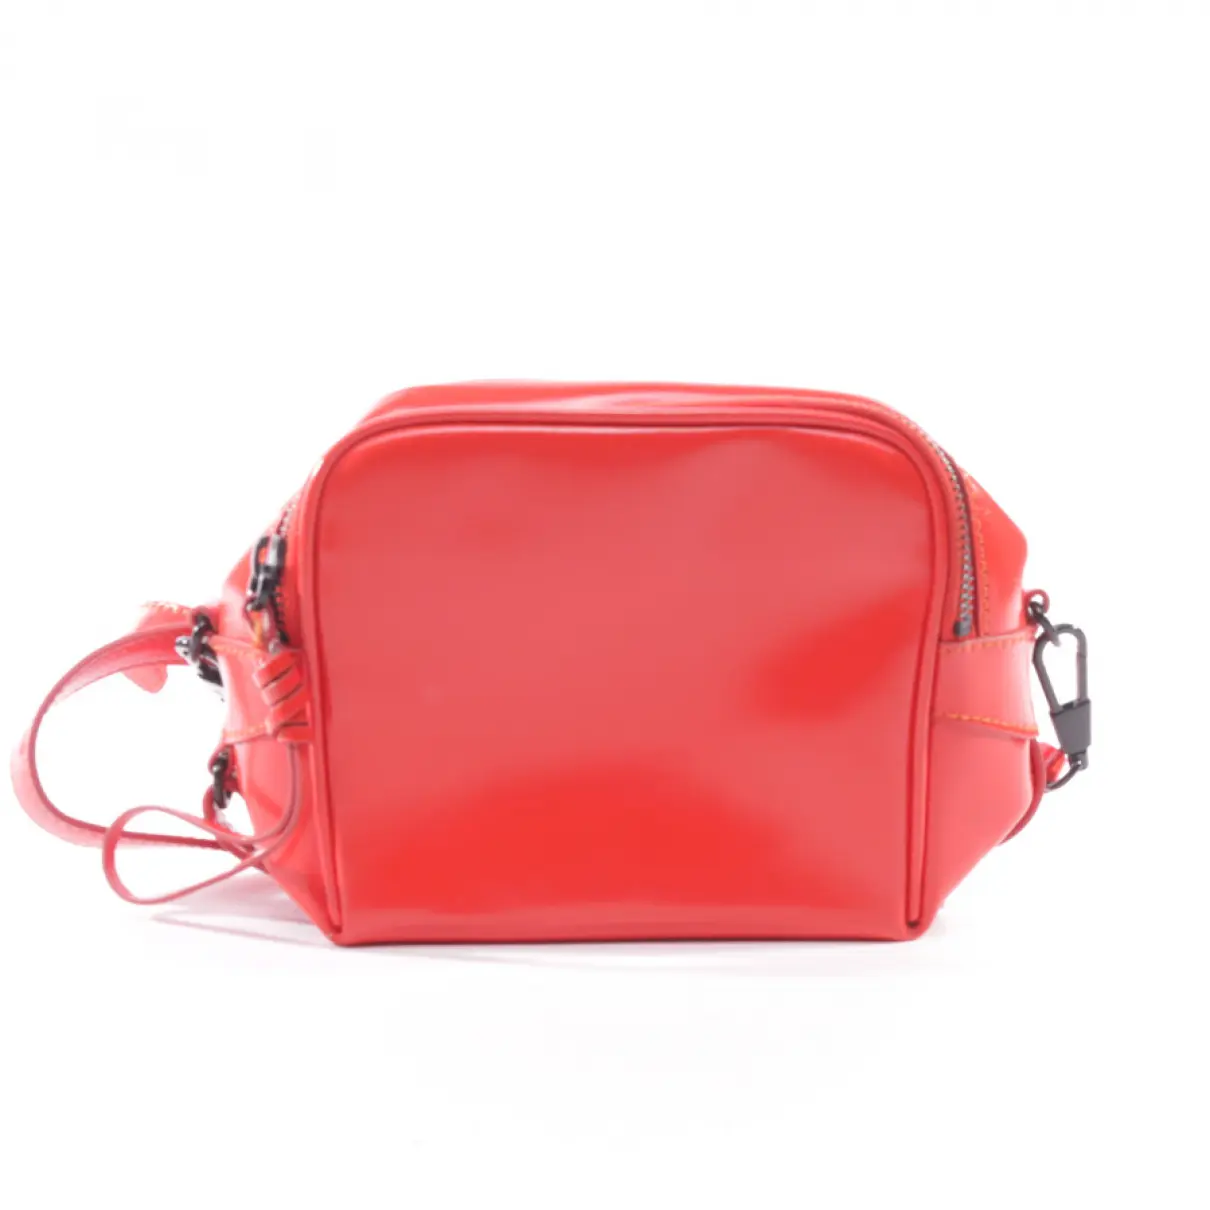 Buy 3.1 Phillip Lim Leather bag online